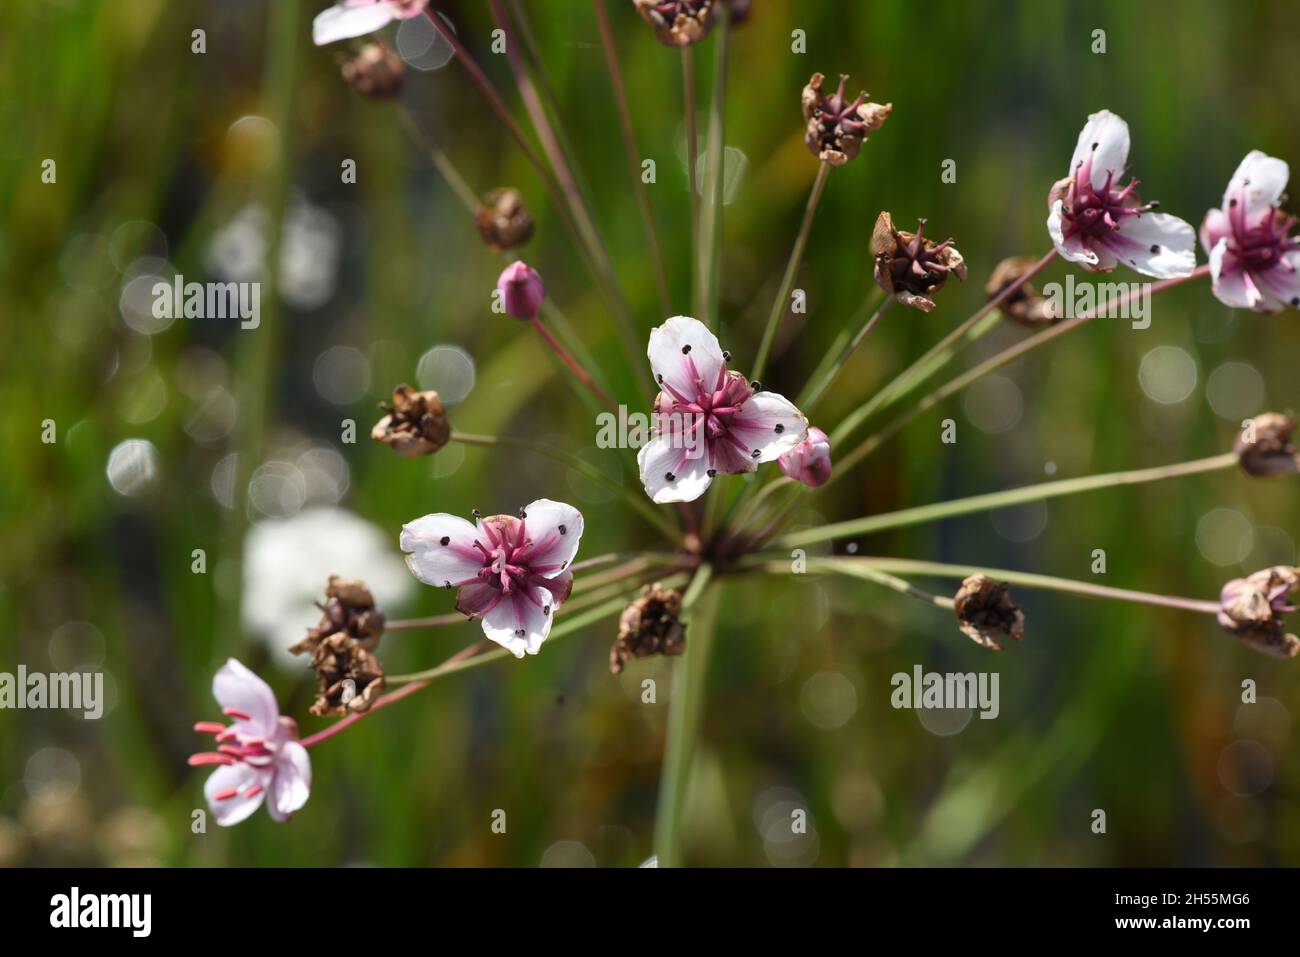 Schwanenblume, Butomus umbellatus ist eine froschloeffelartige Wasserpflanze mit rosa Blueten. La flor del cisne, Butomus umbellatus, es un aquat en forma de rana Foto de stock